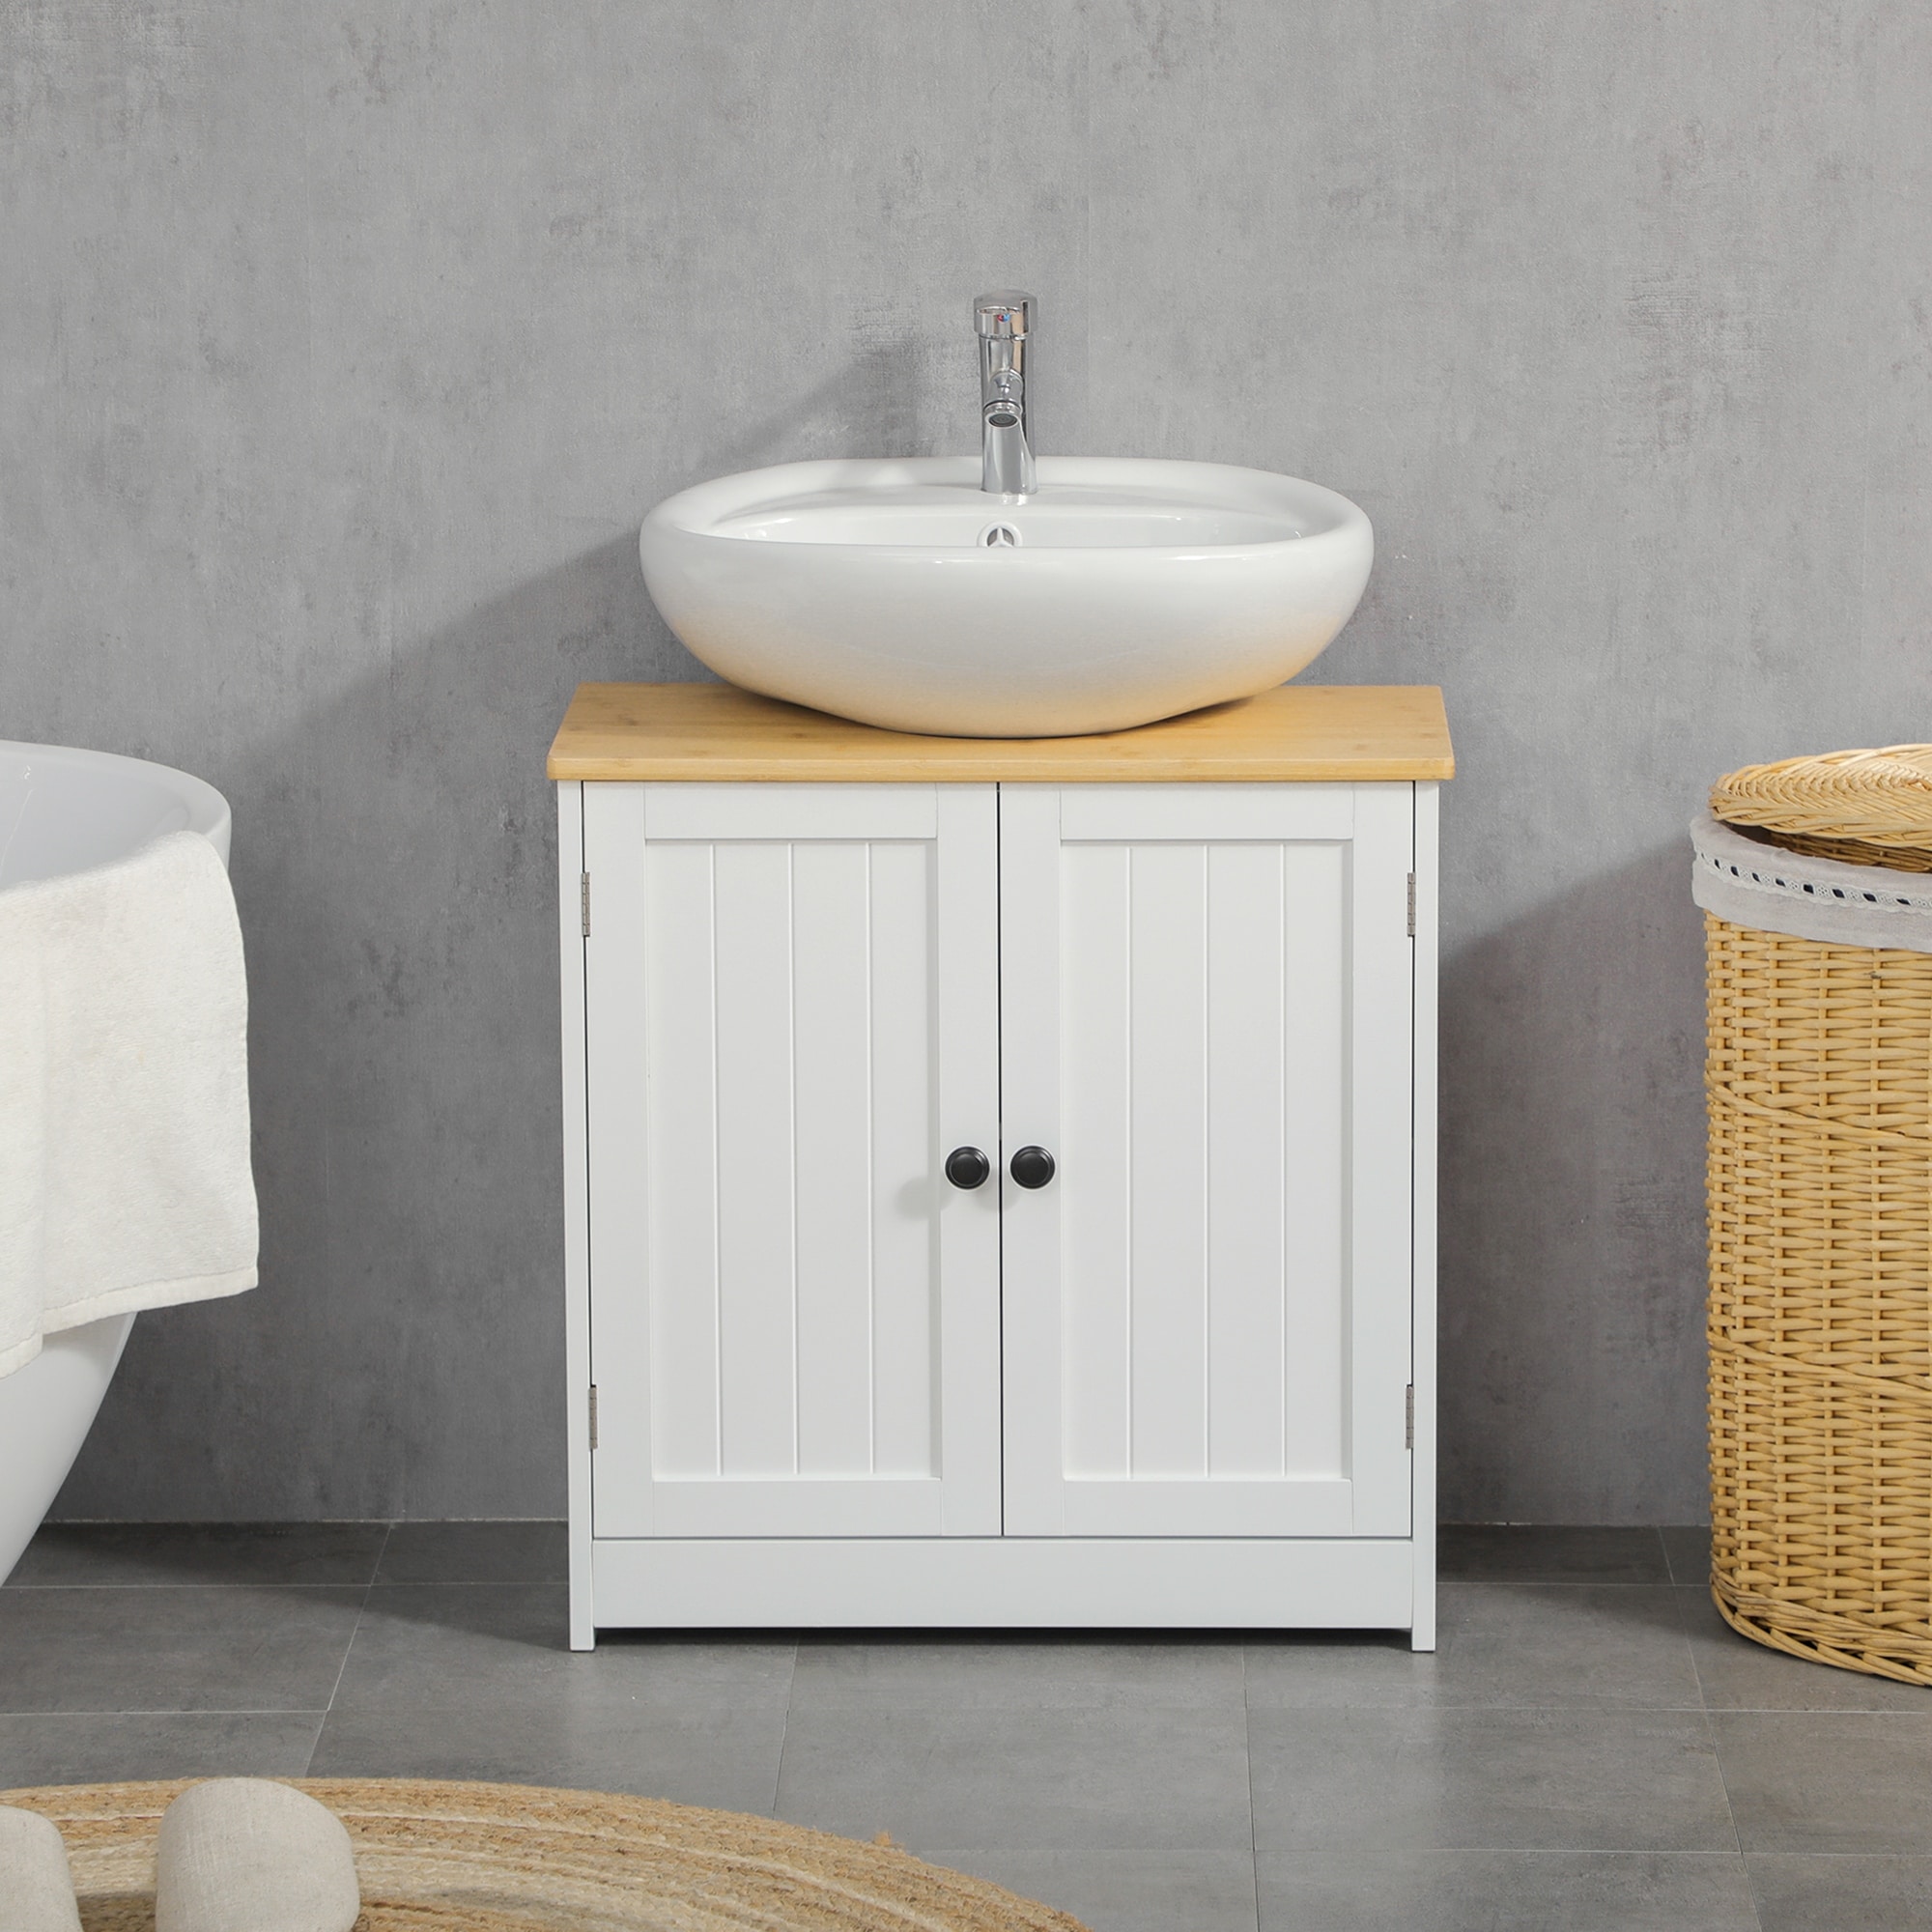 https://ak1.ostkcdn.com/images/products/is/images/direct/c4ec53cb2c0447c5fa7e05c42d435611063e5f67/kleankin-Modern-Bathroom-Sink-Cabinet%2C-Pedestal-Sink-Storage-Cabinet-with-Double-Doors-and-Adjustable-Shelf%2C-Bathroom-Vanity.jpg